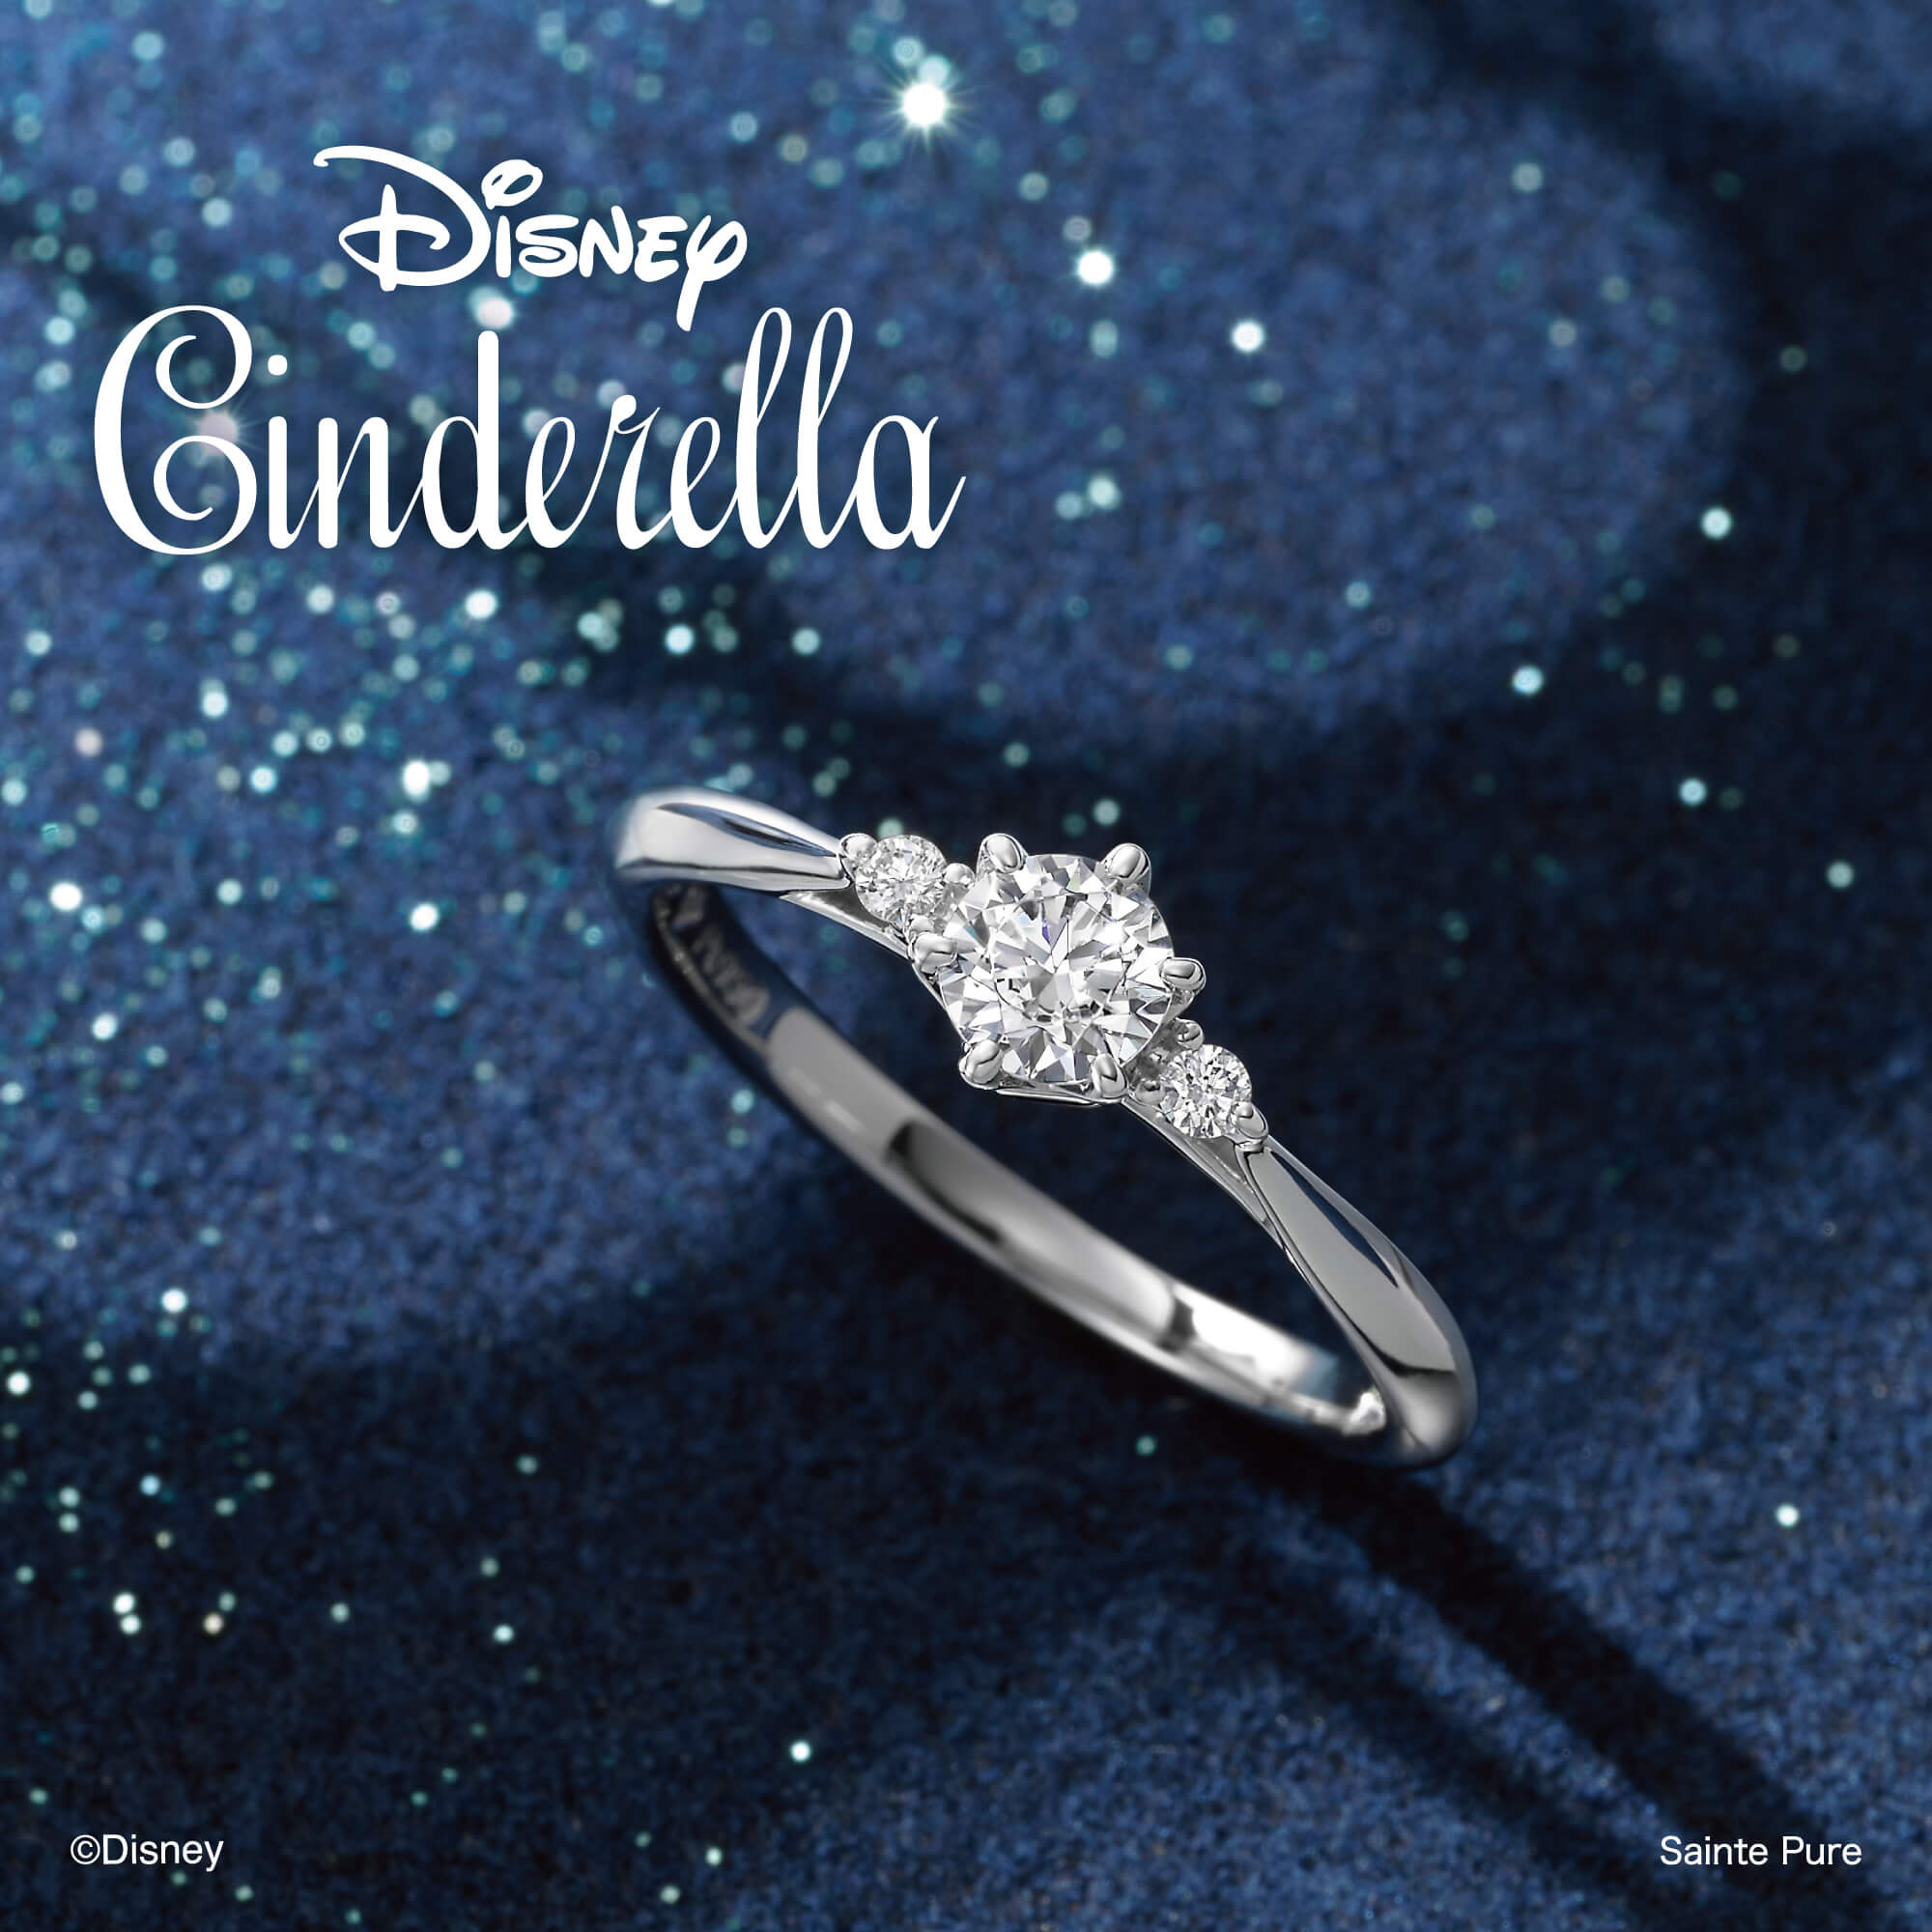 DisneyCinderellaディズニーシンデレラの婚約指輪エンゲージリングEngagementringのYou’remyPrincessユーアーマイプリンセス